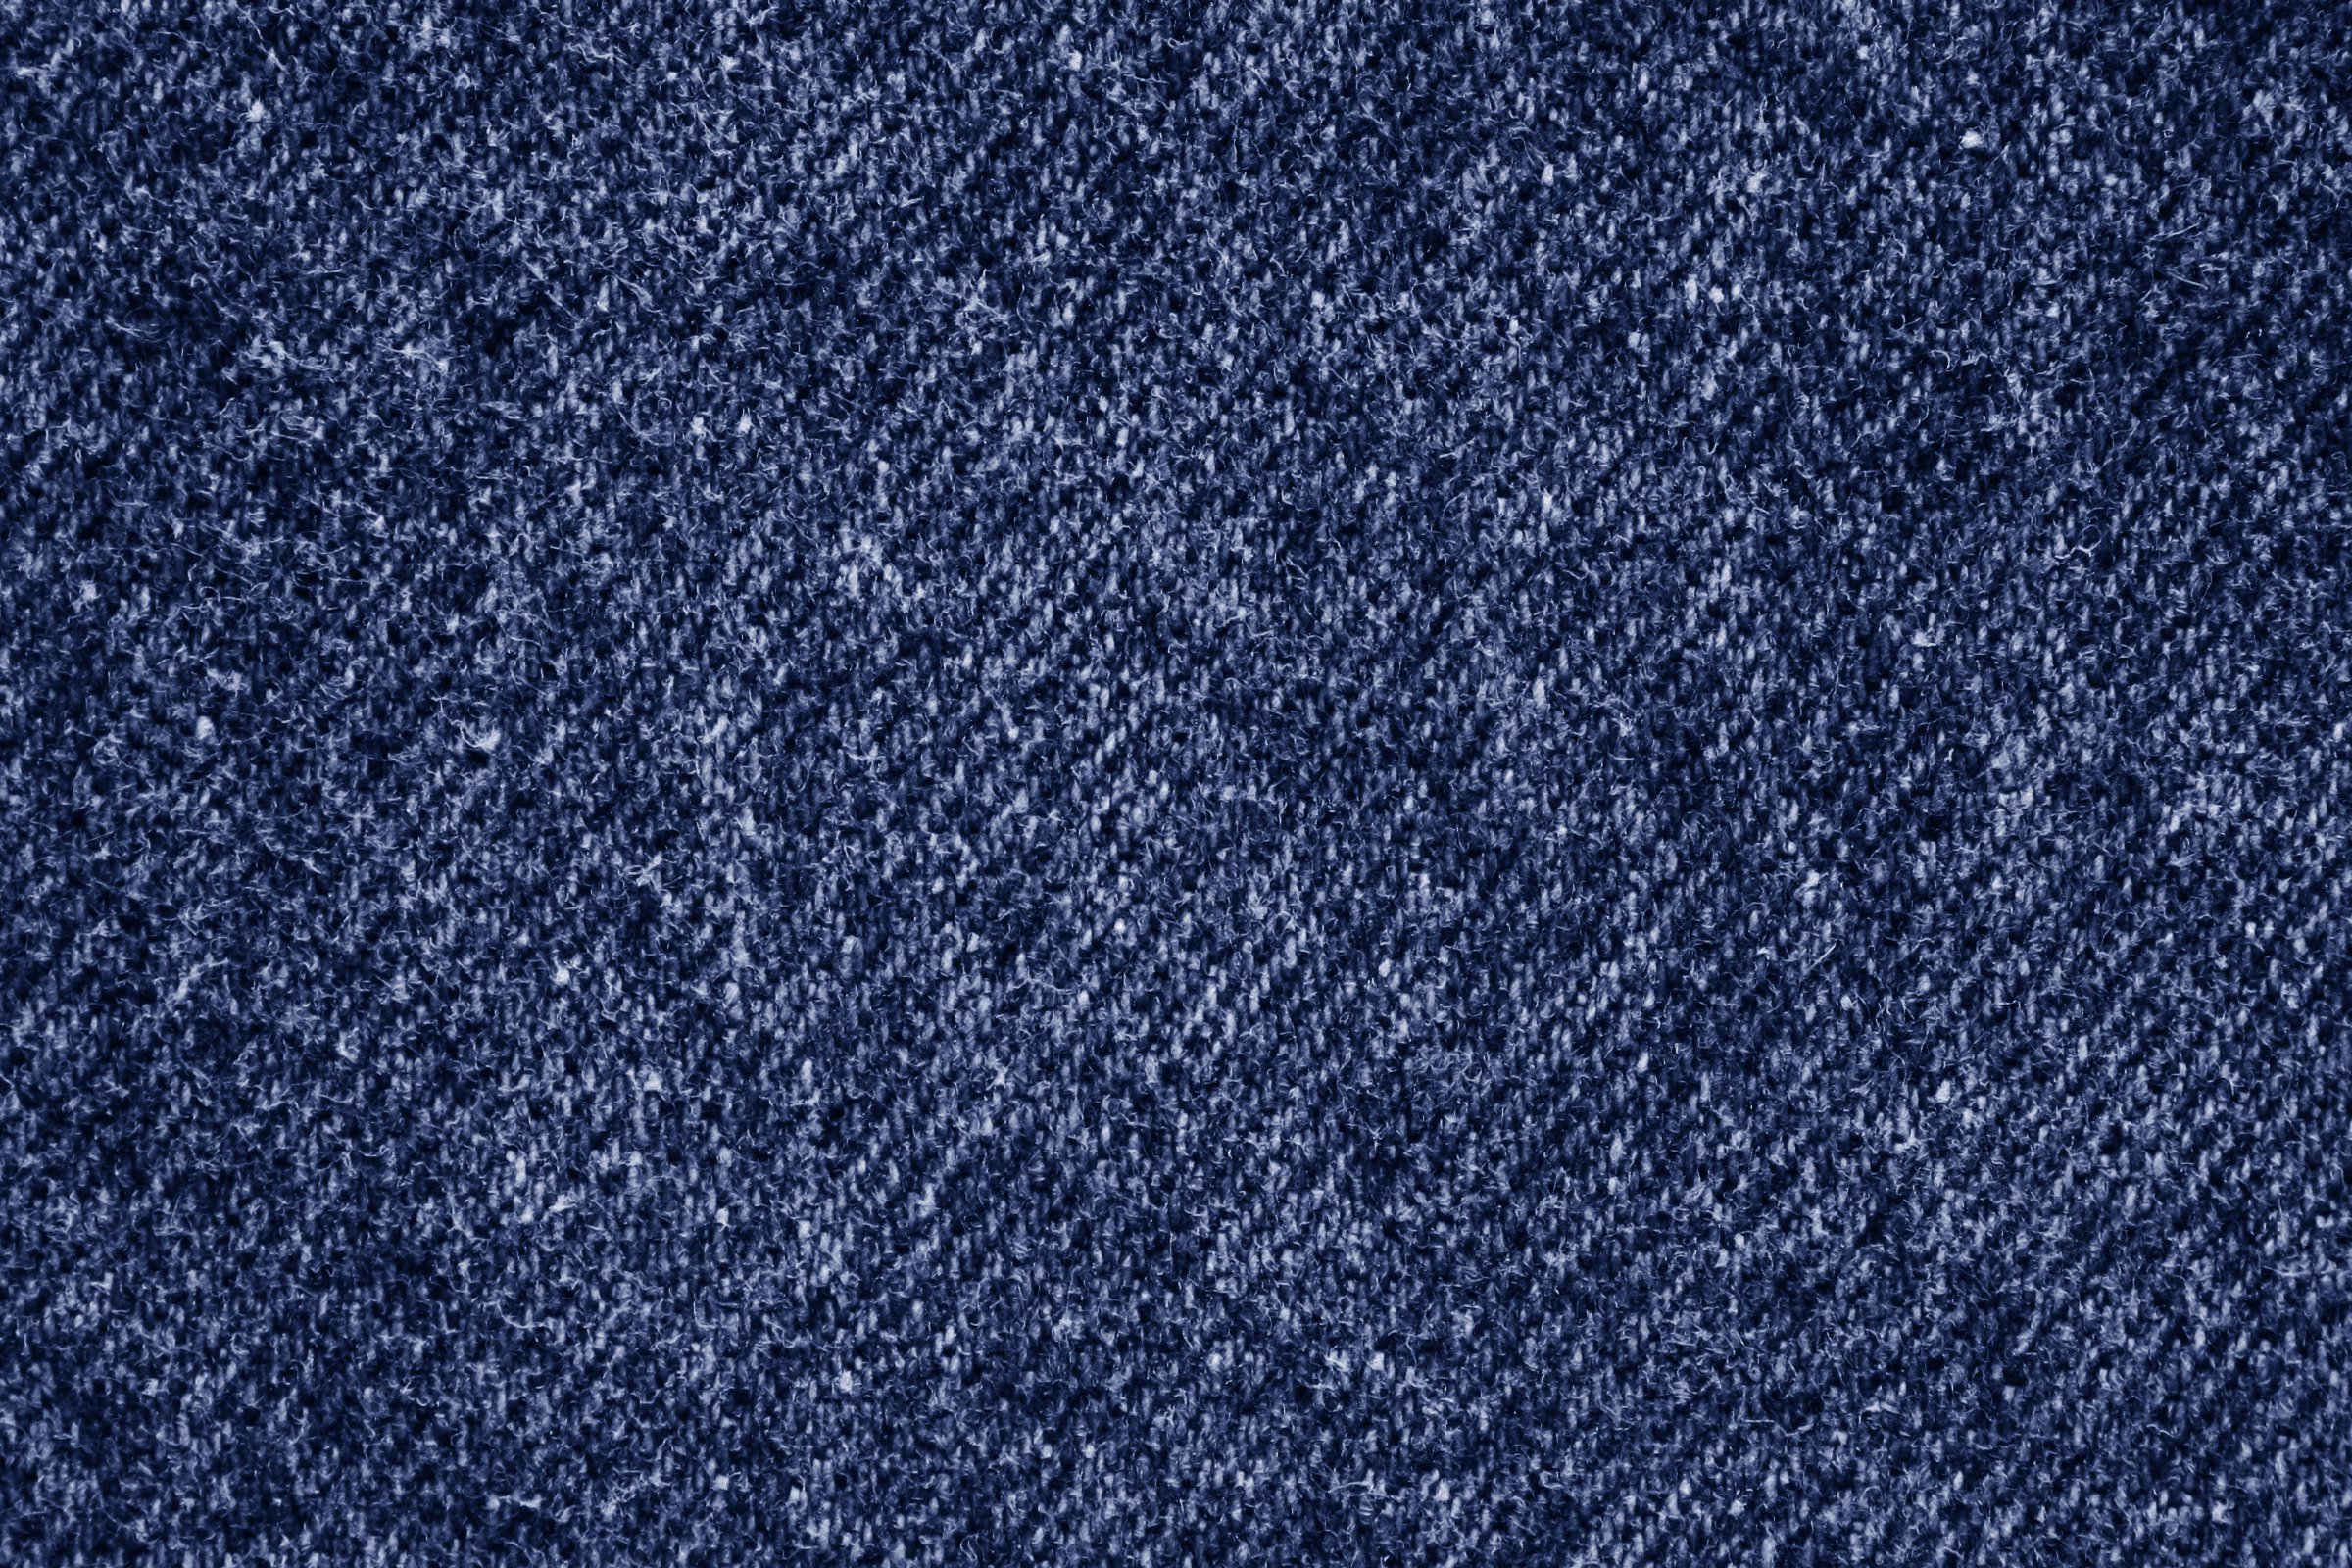 Dark Blue Denim Fabric Texture Picture | Free Photograph | Photos ...